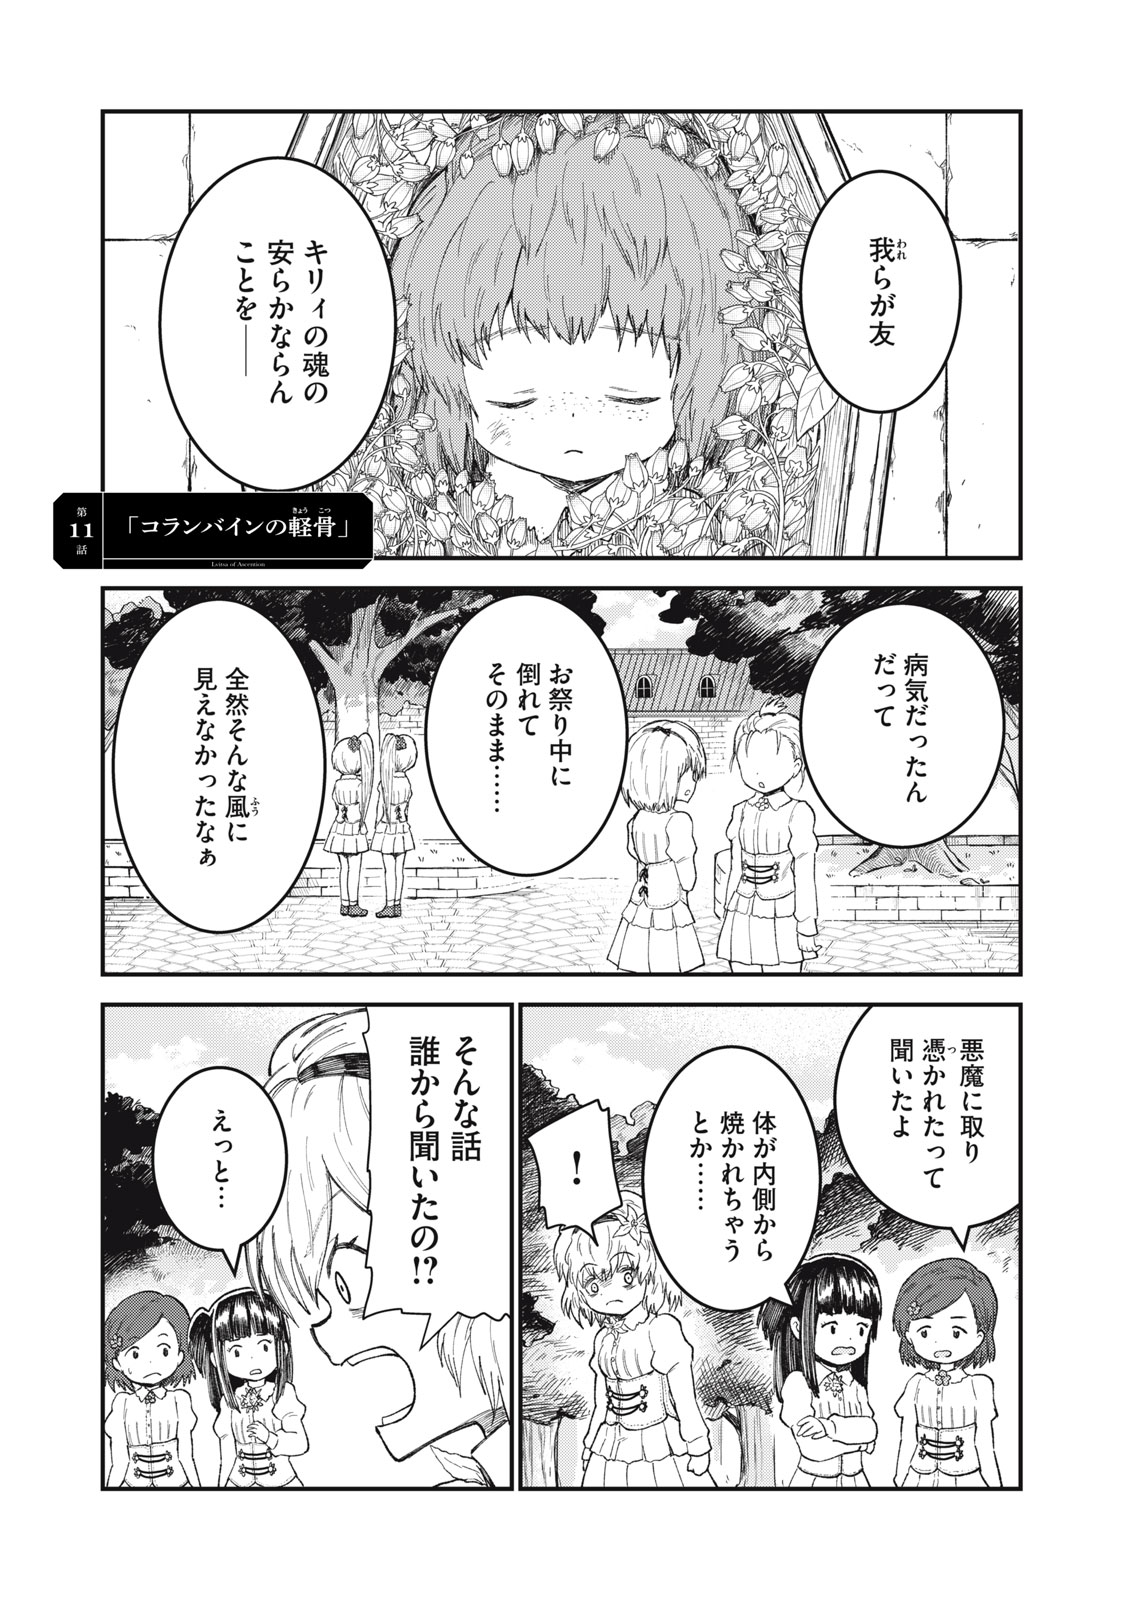 Itadaki no Lvitsa - Chapter 11 - Page 2